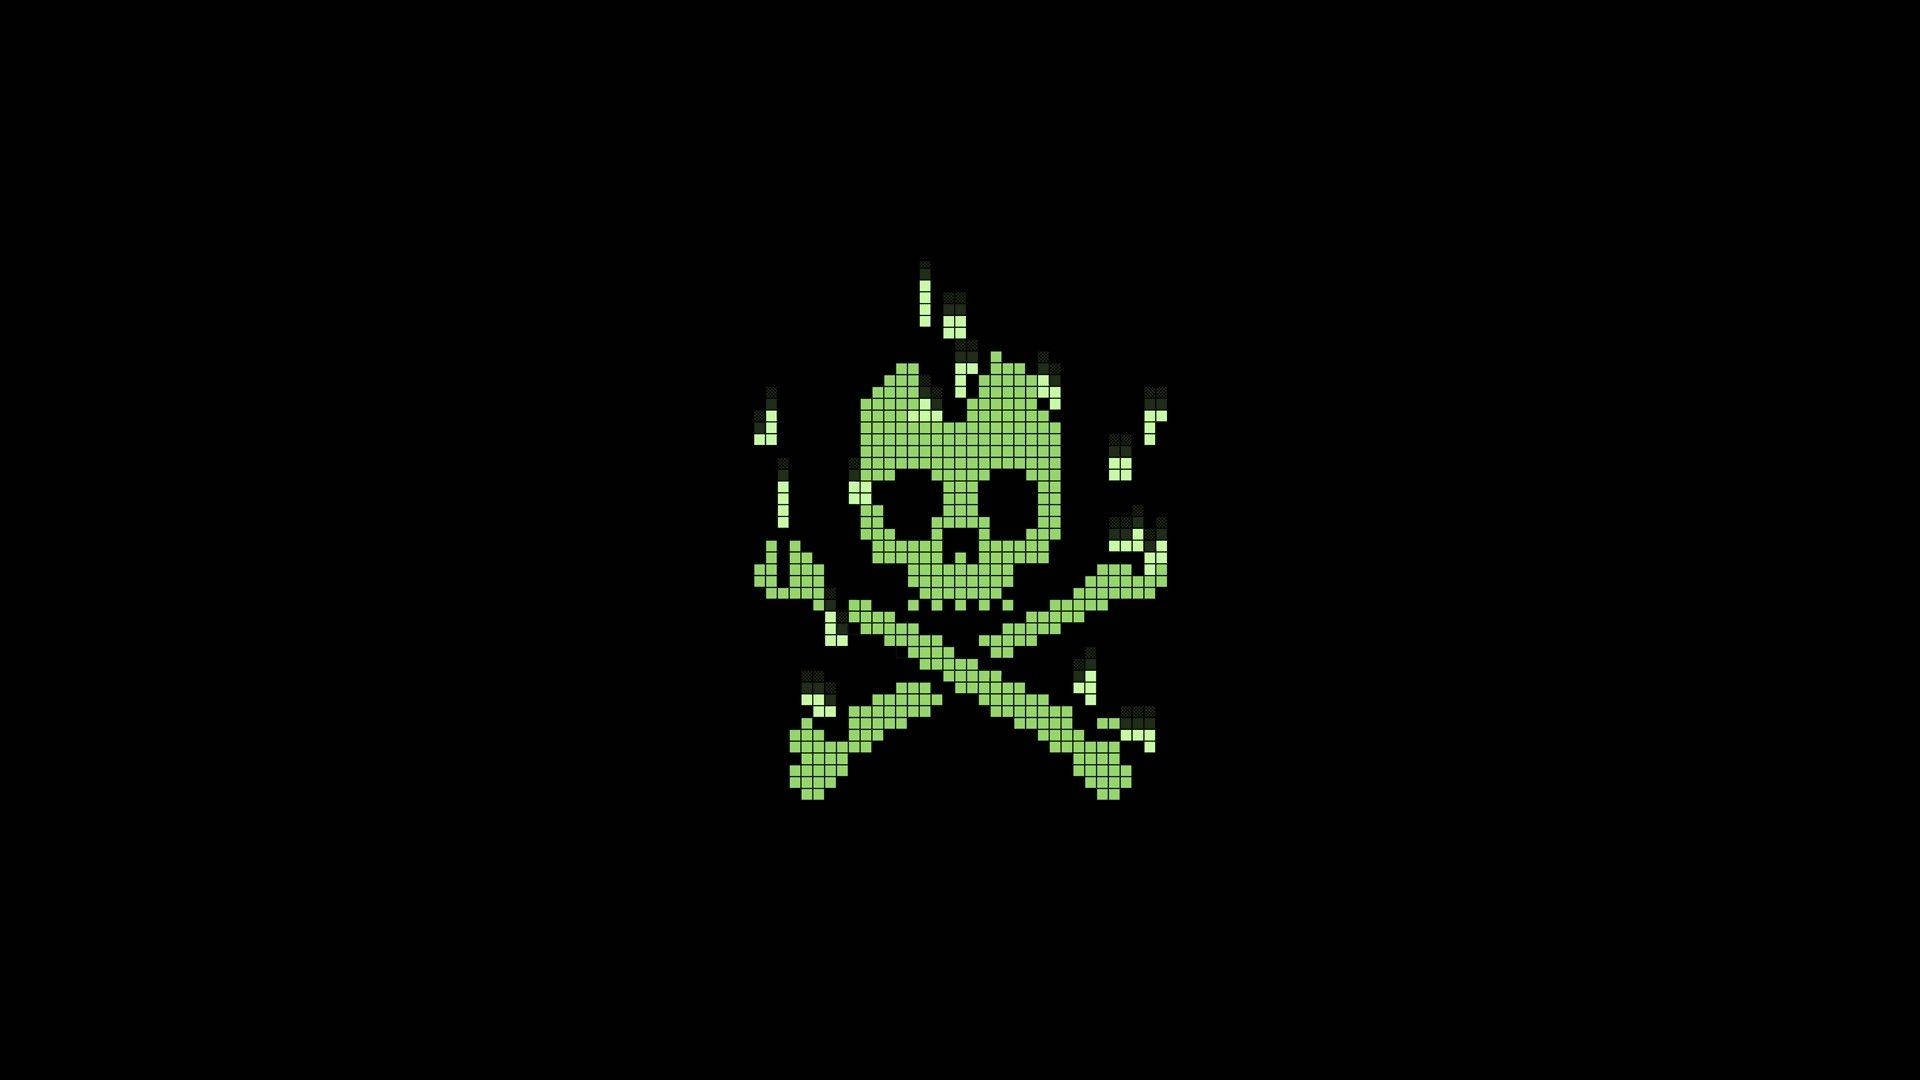 “Danger Ahead: Beware of the Hazardous Skull” Wallpaper